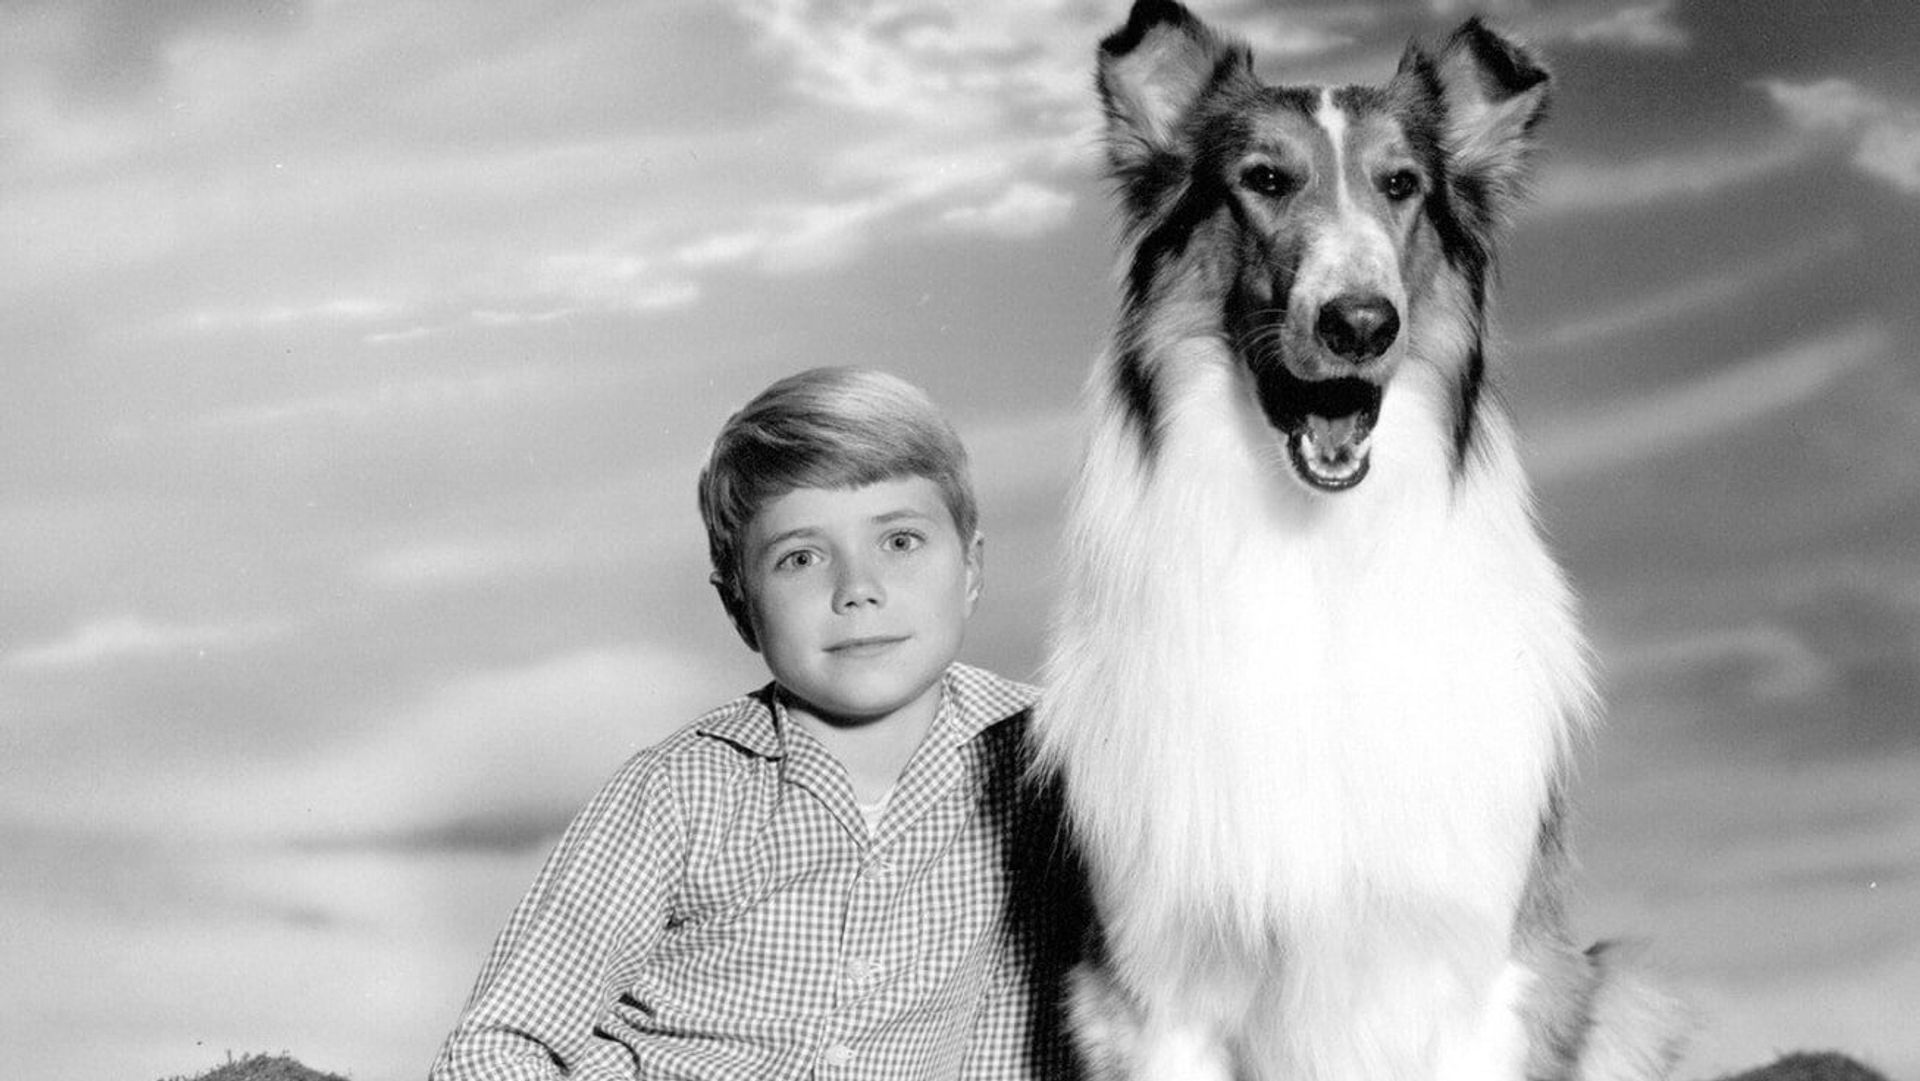 Lassie Movie Poster (#1 of 3) - IMP Awards